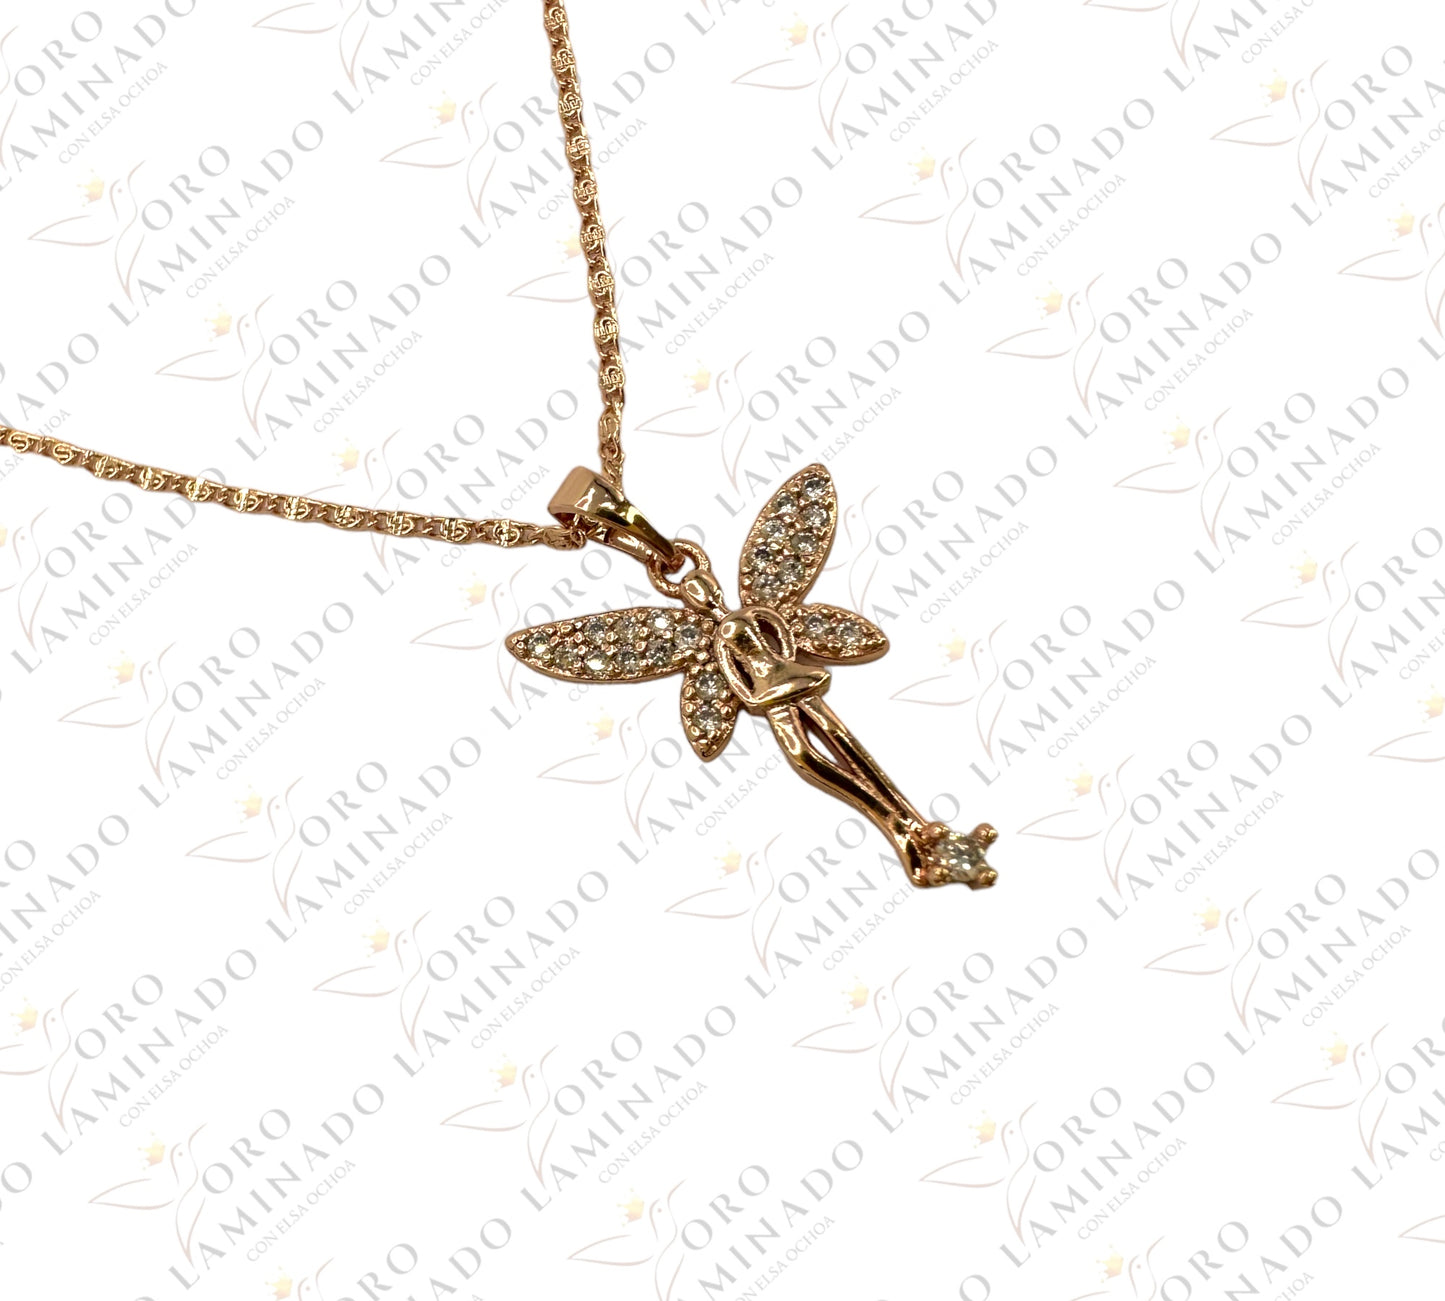 Fairy godmother necklace set G320